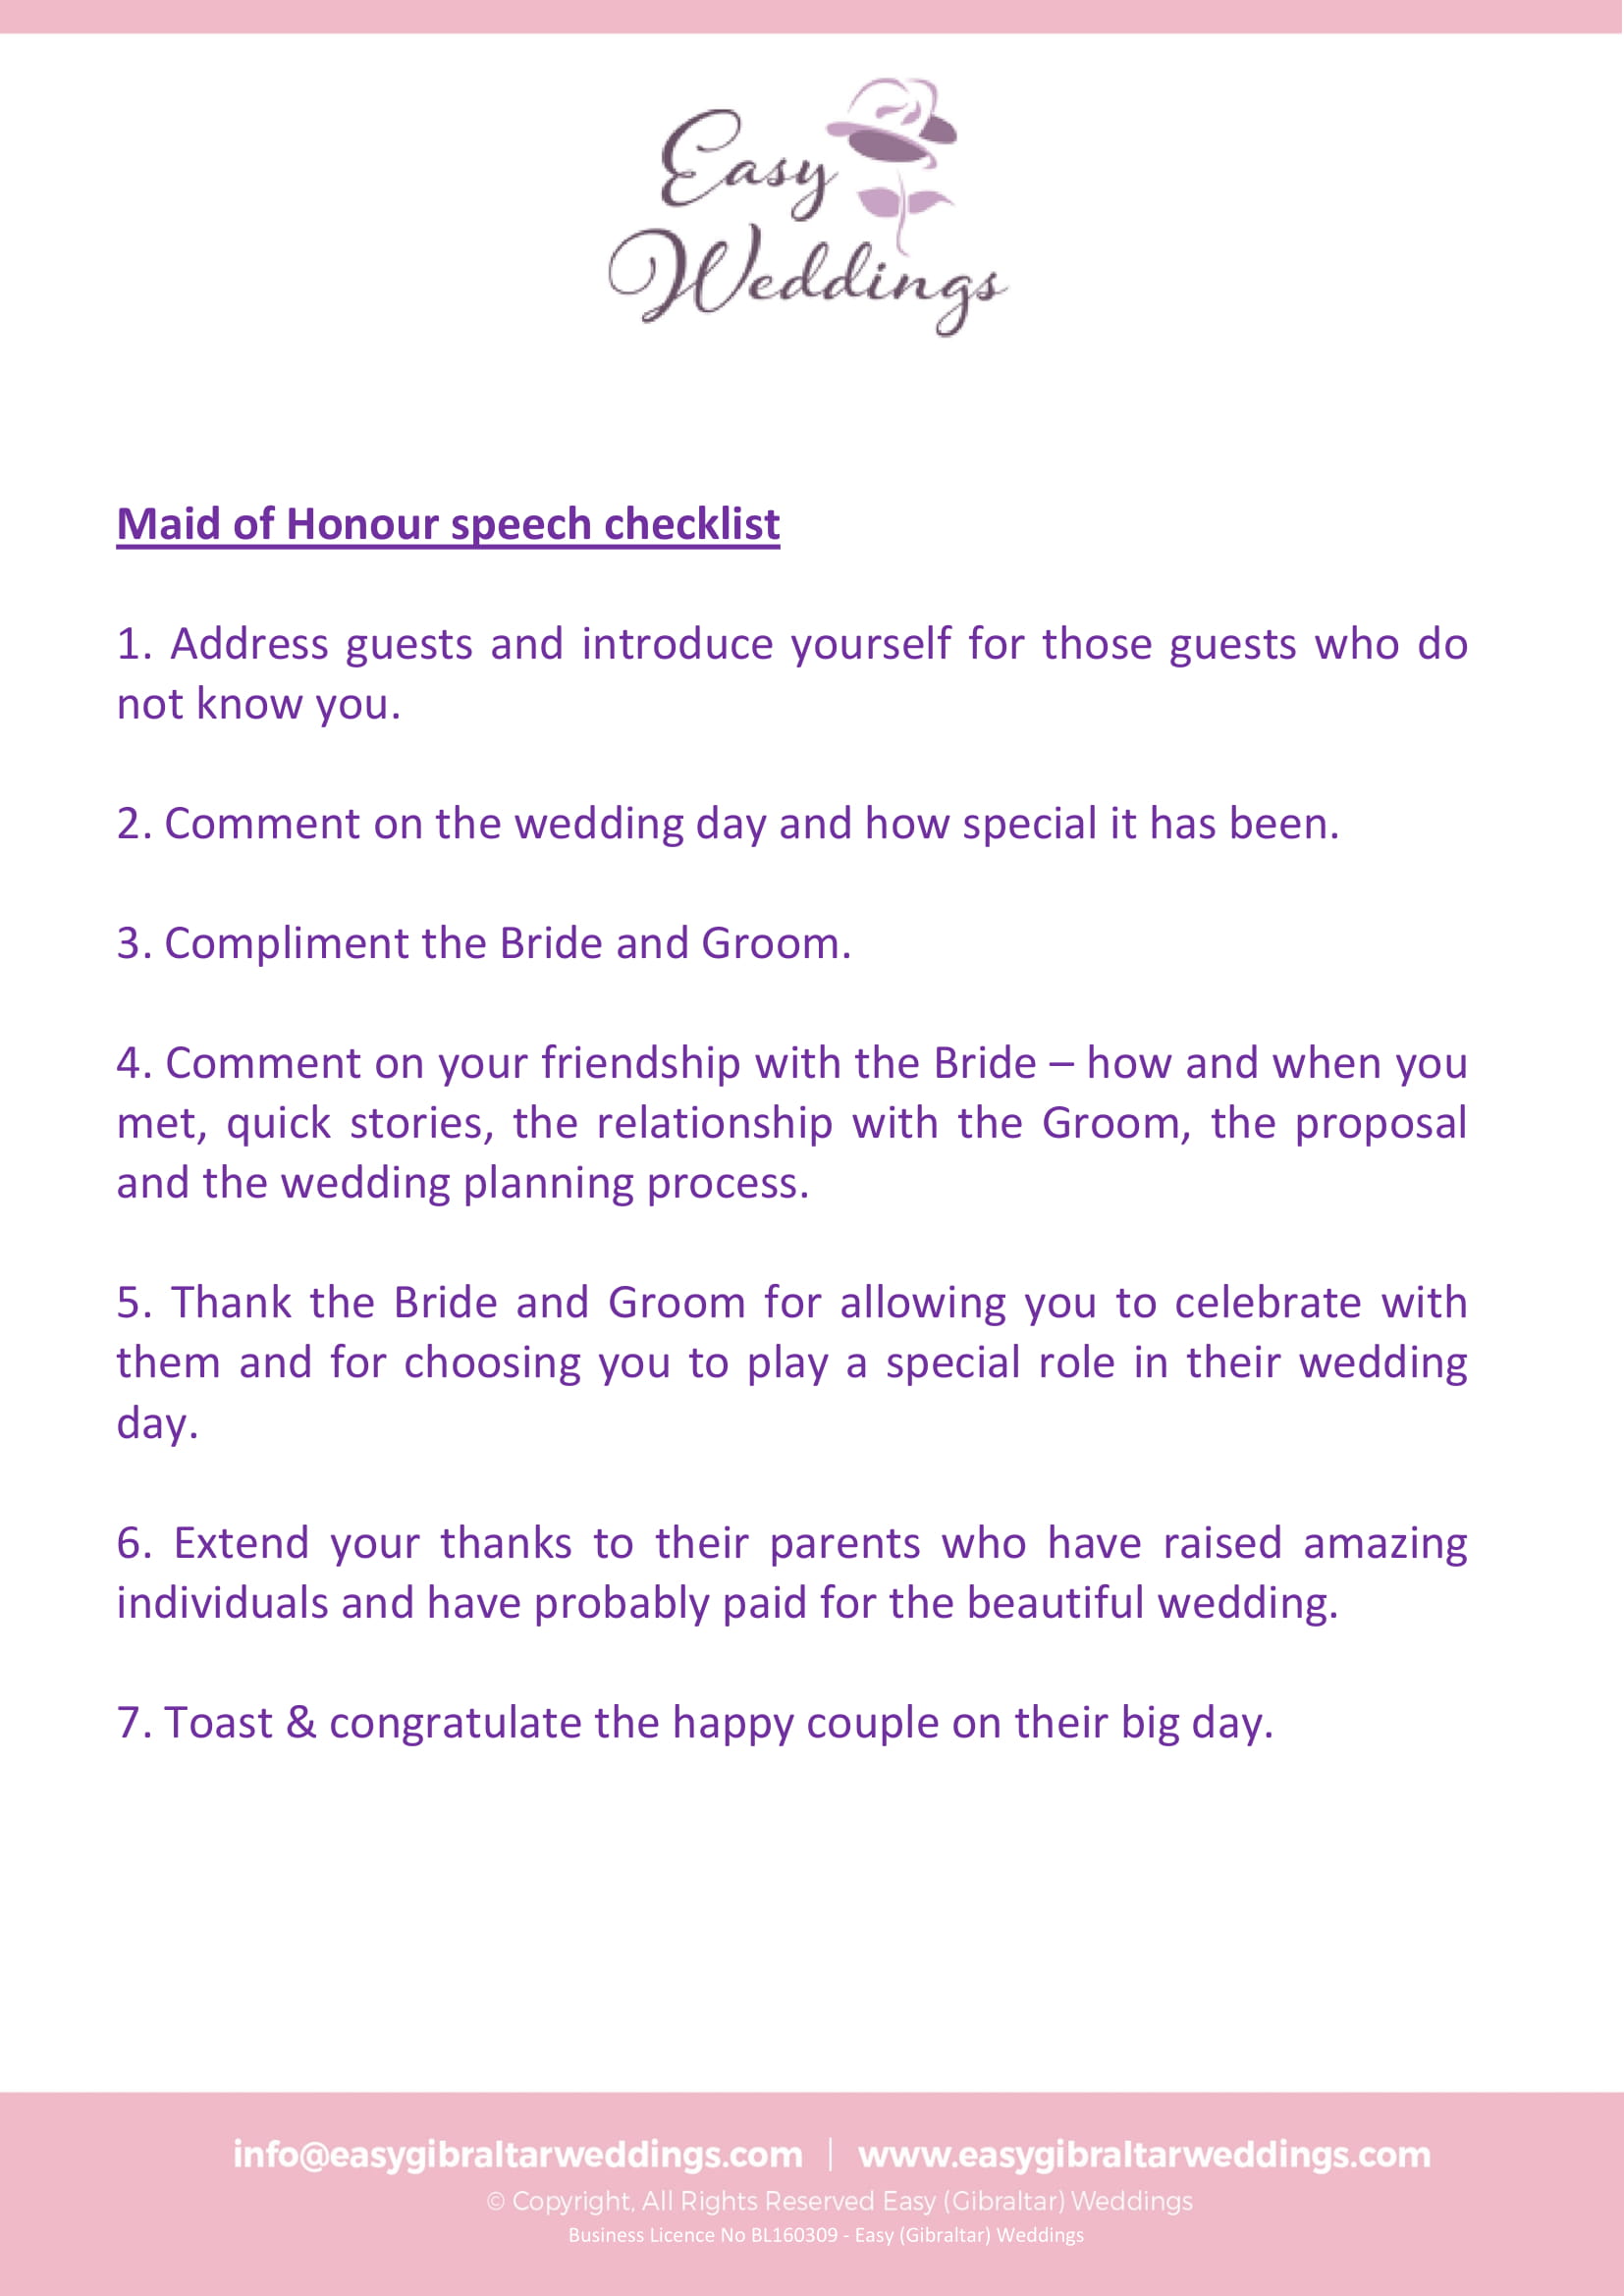 Maid of Honor Speech Checklist